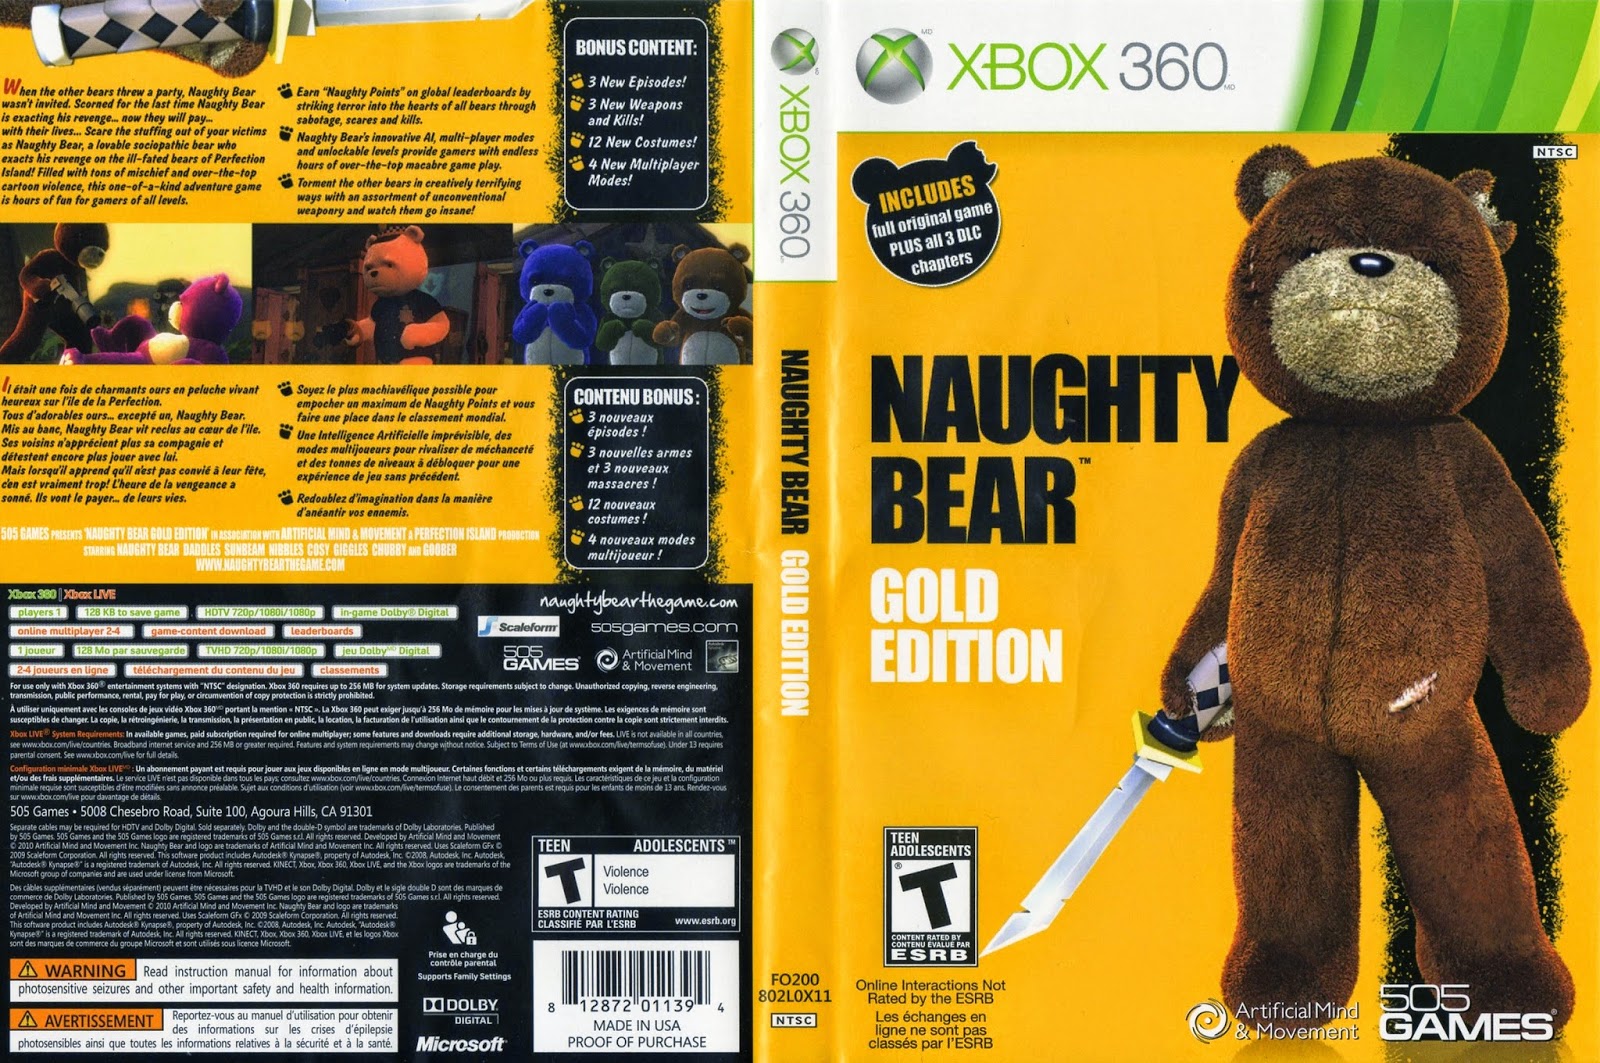 http://www.covergalaxy.com/forum/attachments/microsoft-xbox-360/11595d1313119423-naughty-bear-gold-edition-ntsc-cover-disc-scan-naughty-bear-gold-edition-front.jpg